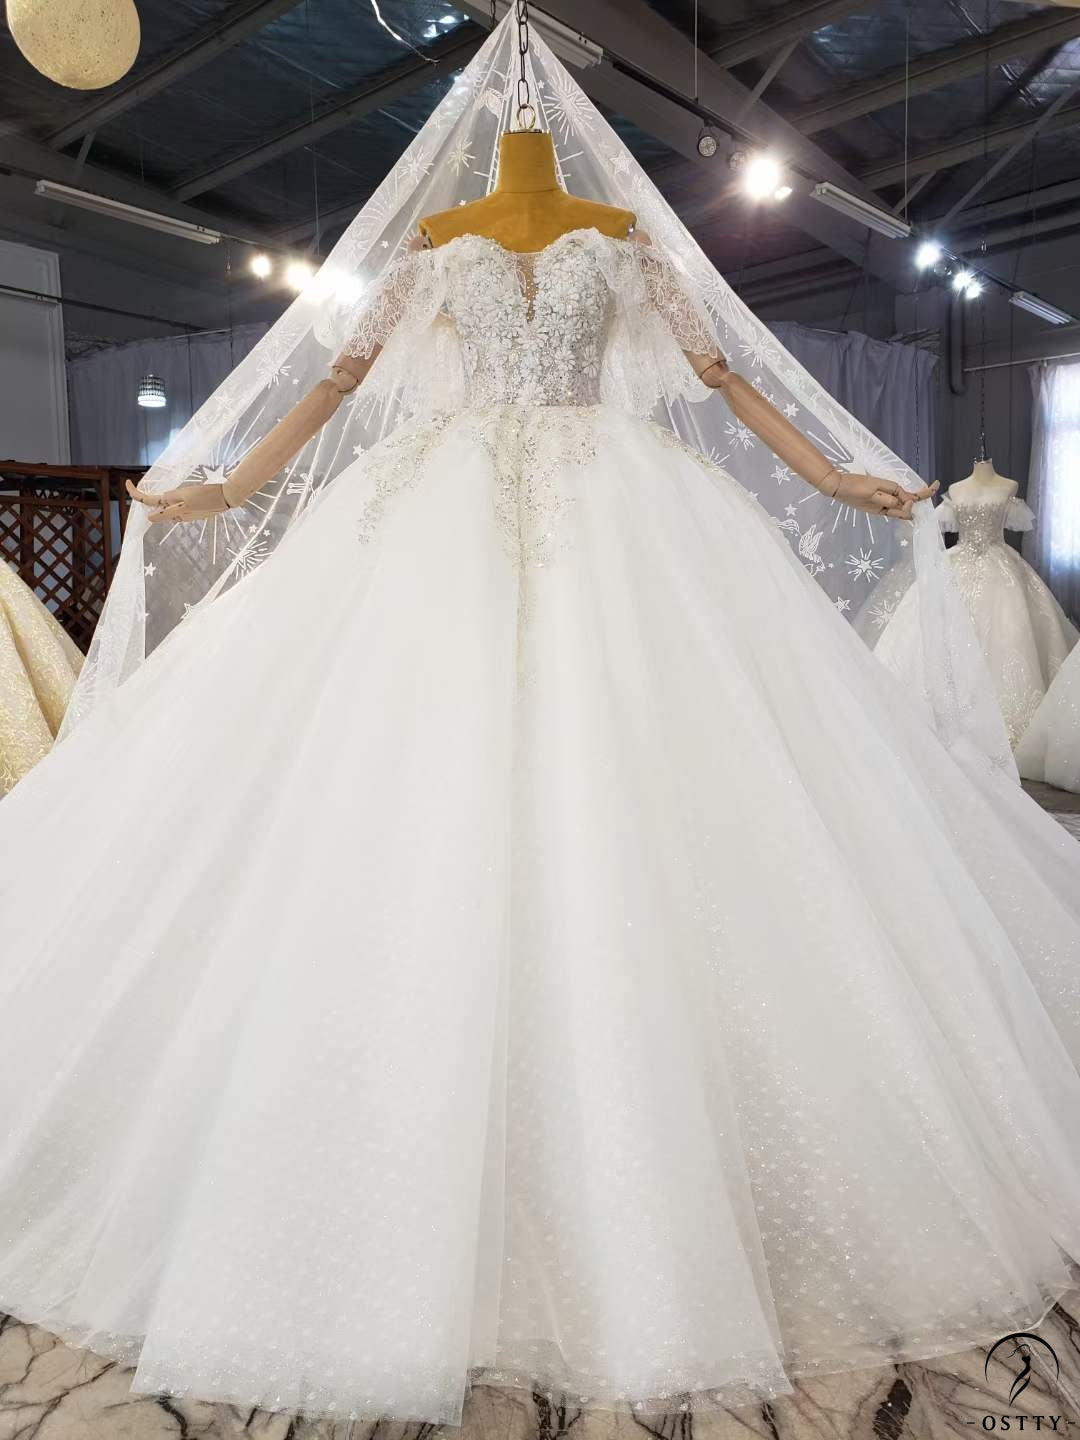 Off Shoulder Lace Flower Wedding Dress OSX001 - White Wedding Dresses $599.99